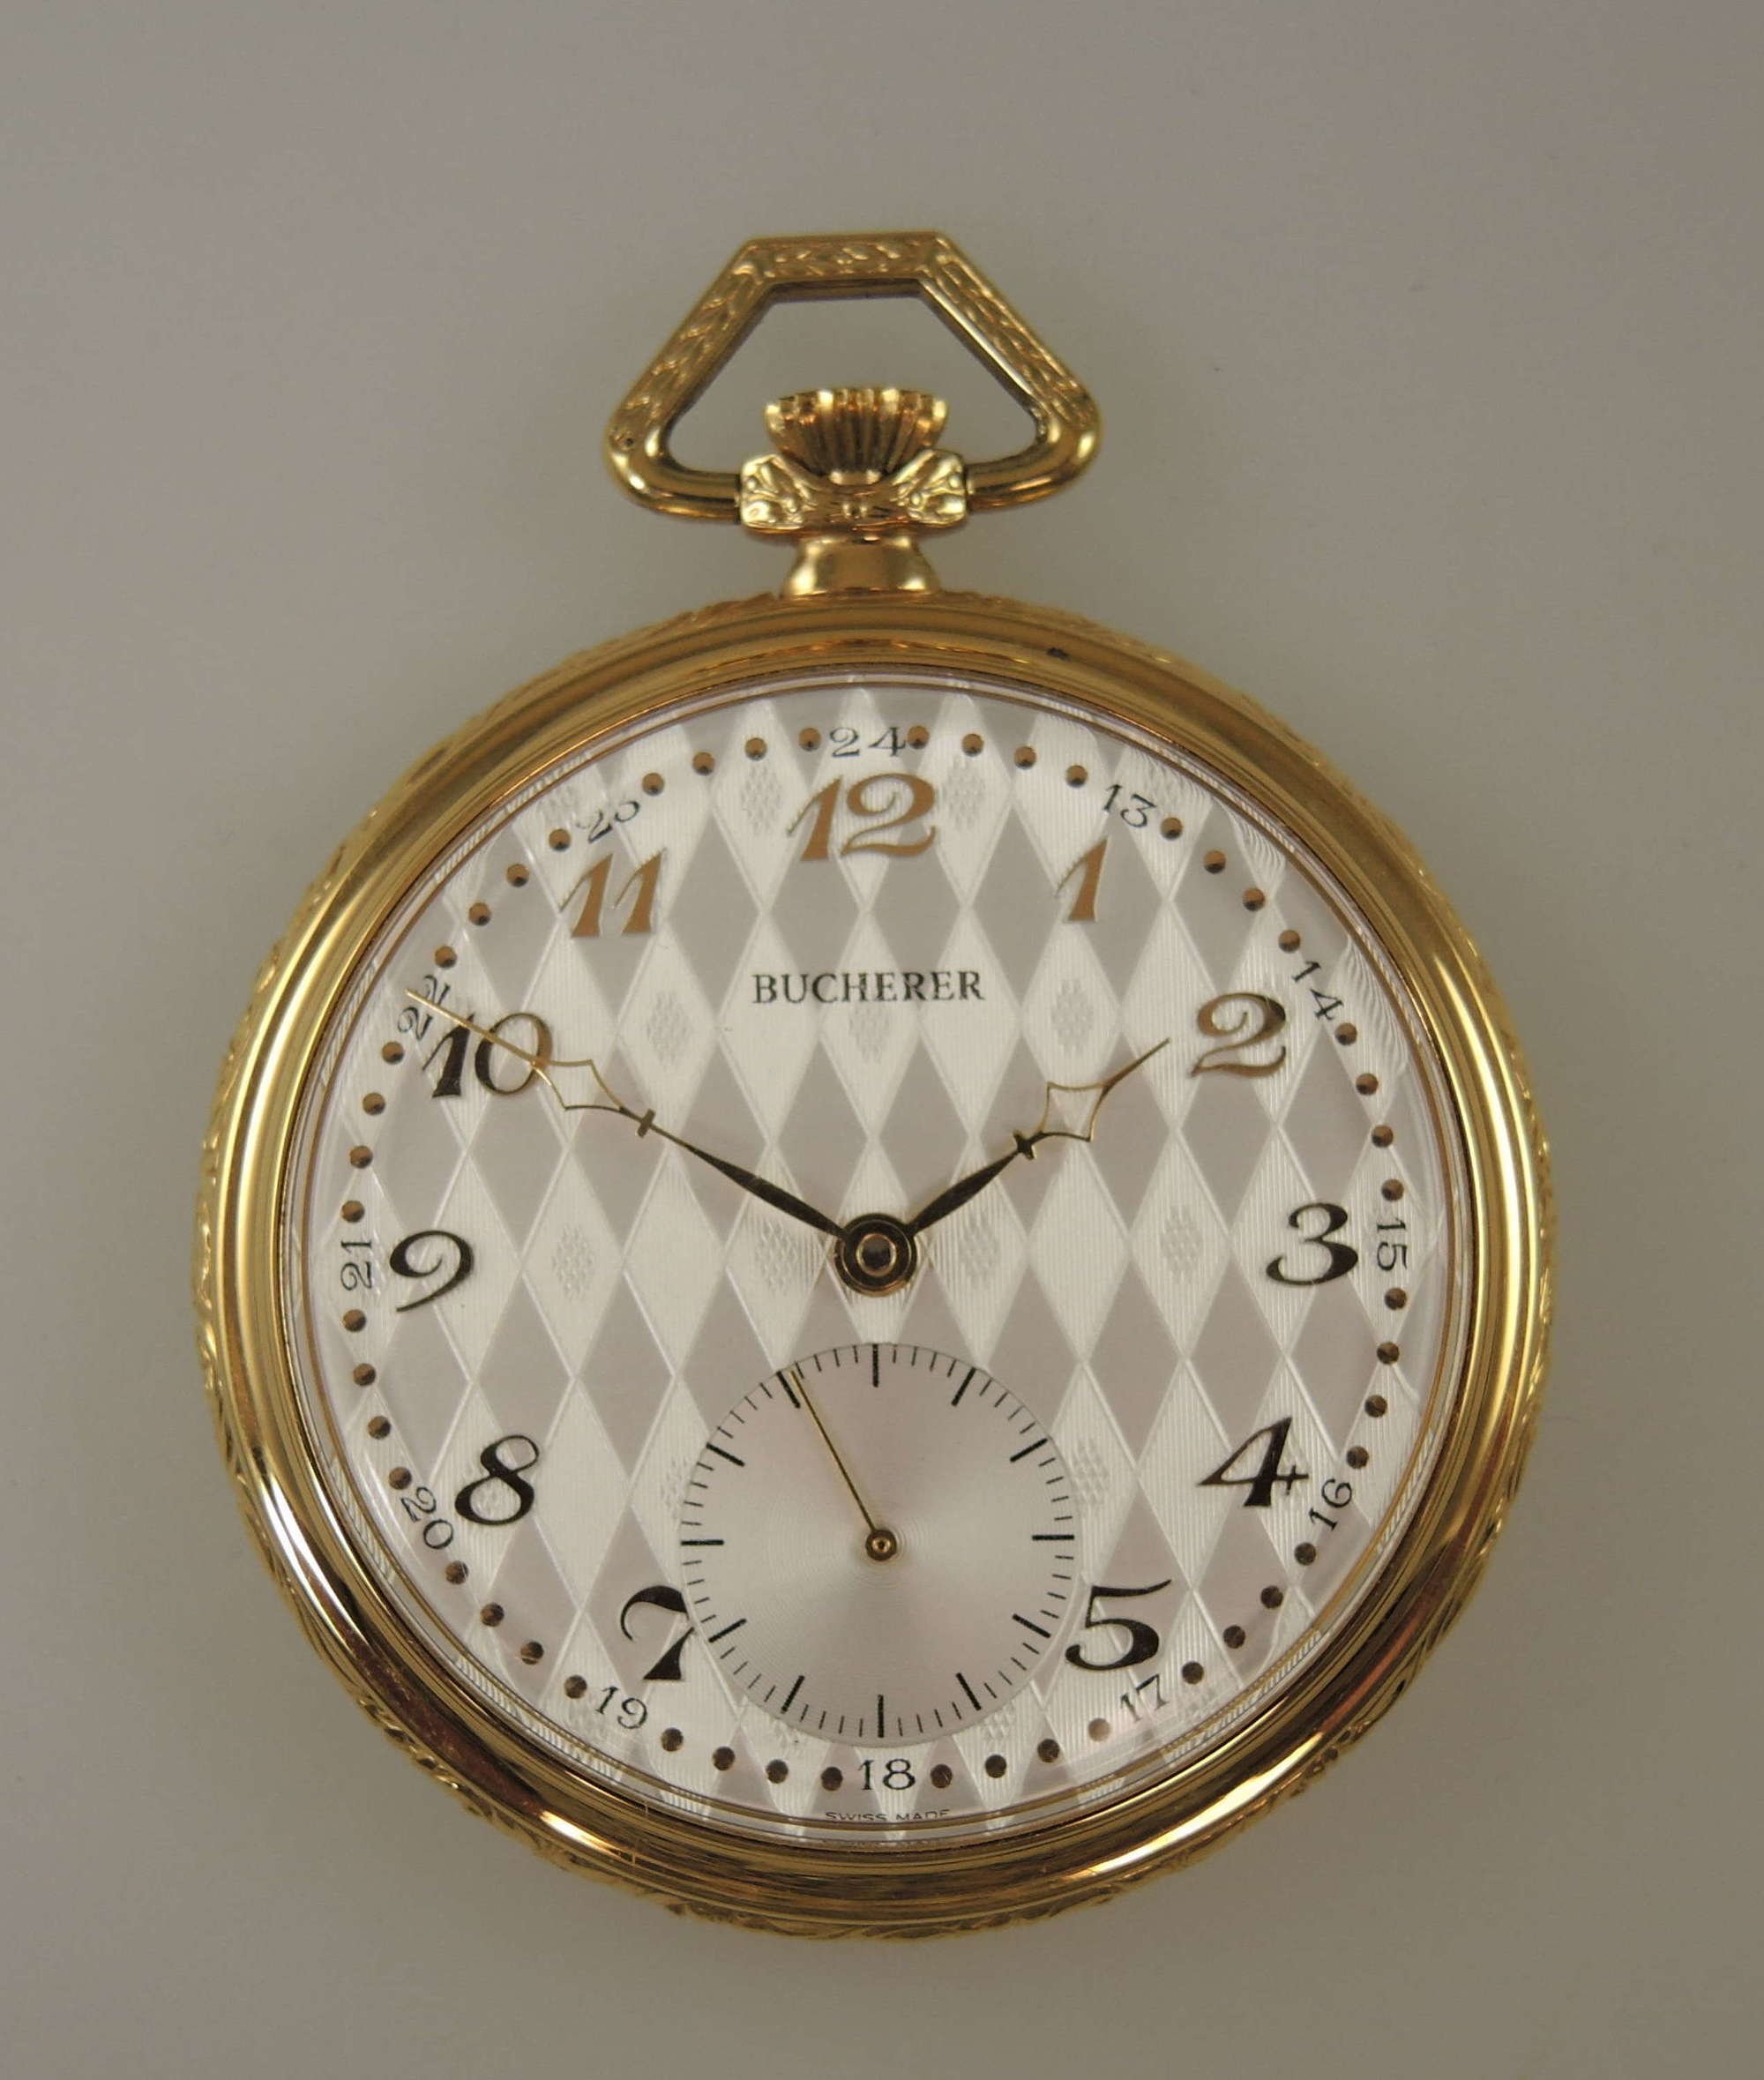 Stunning vintage pocket watch made by BUCHERER c1950